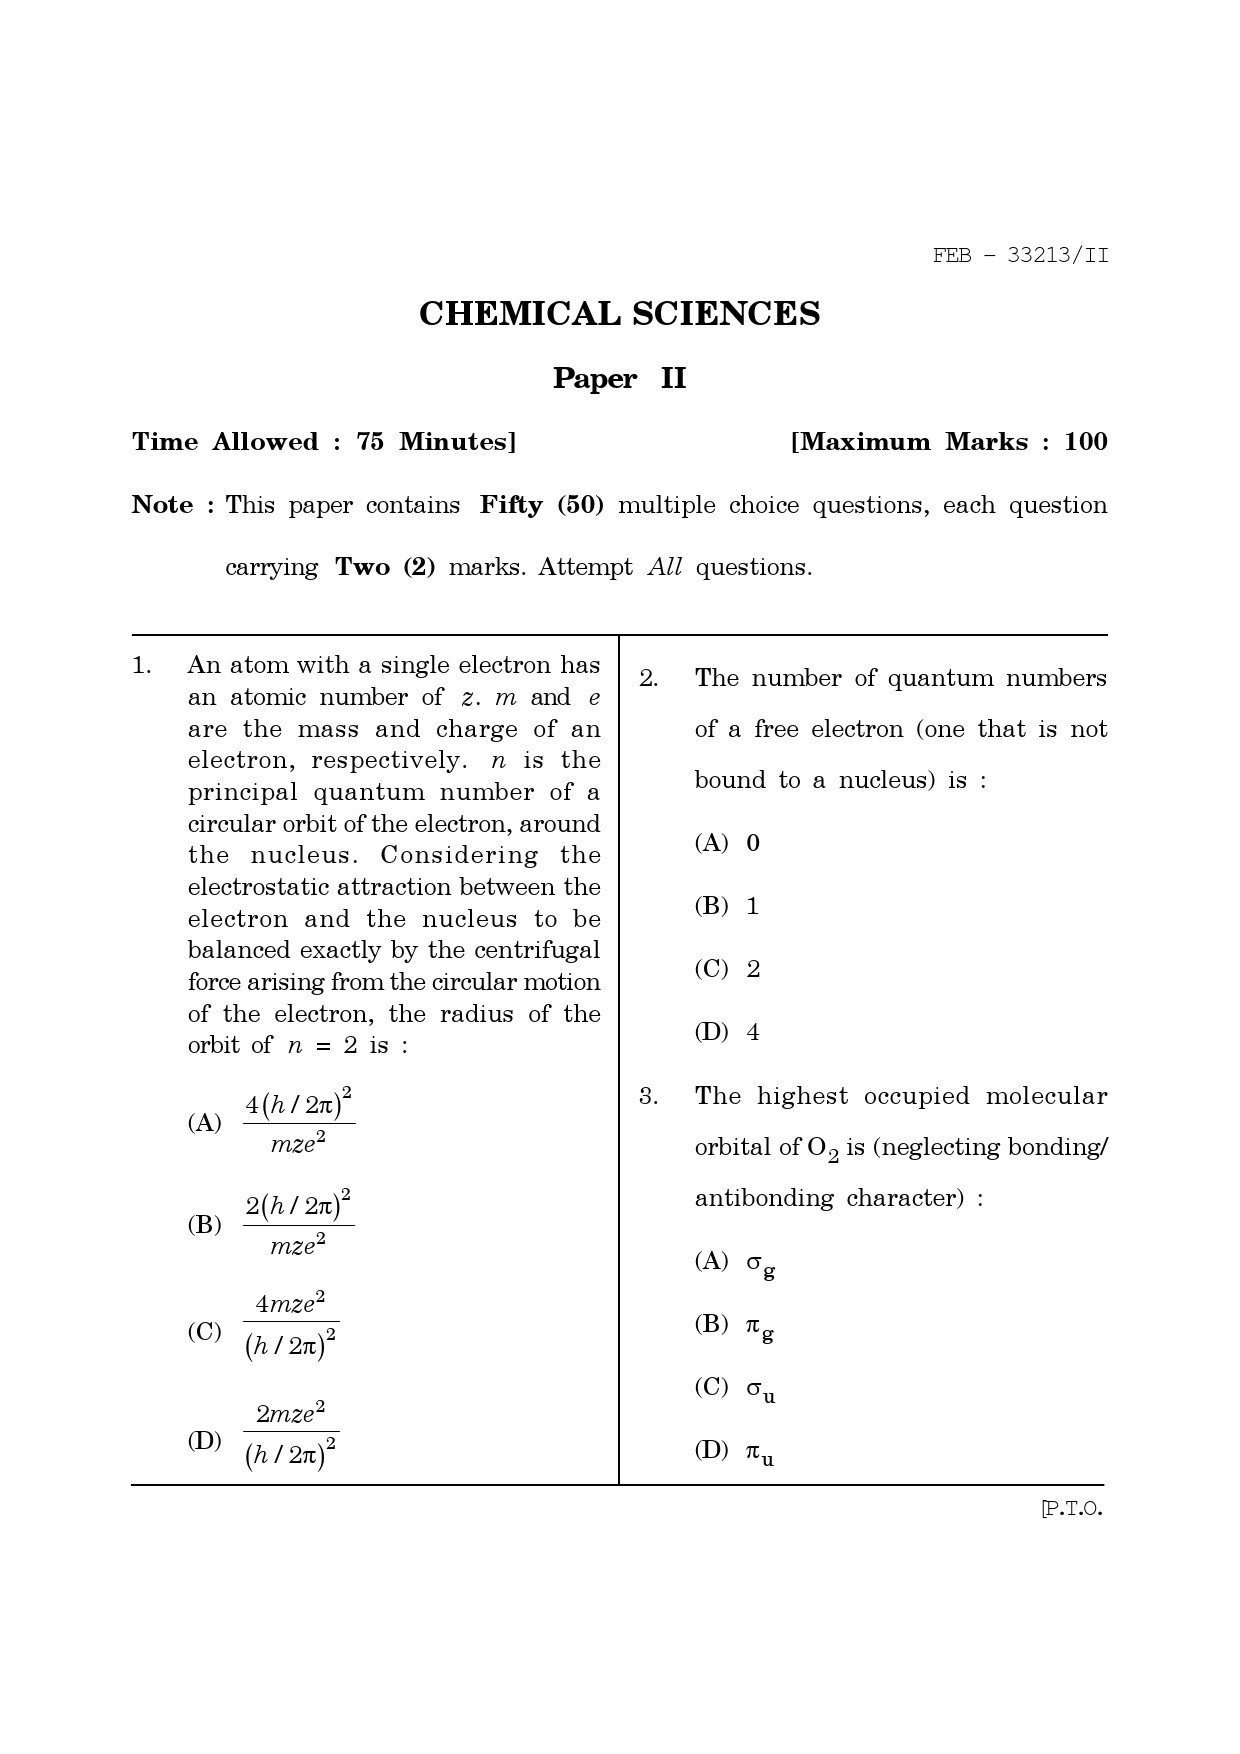 Maharashtra SET Chemical Sciences Question Paper II February 2013 1